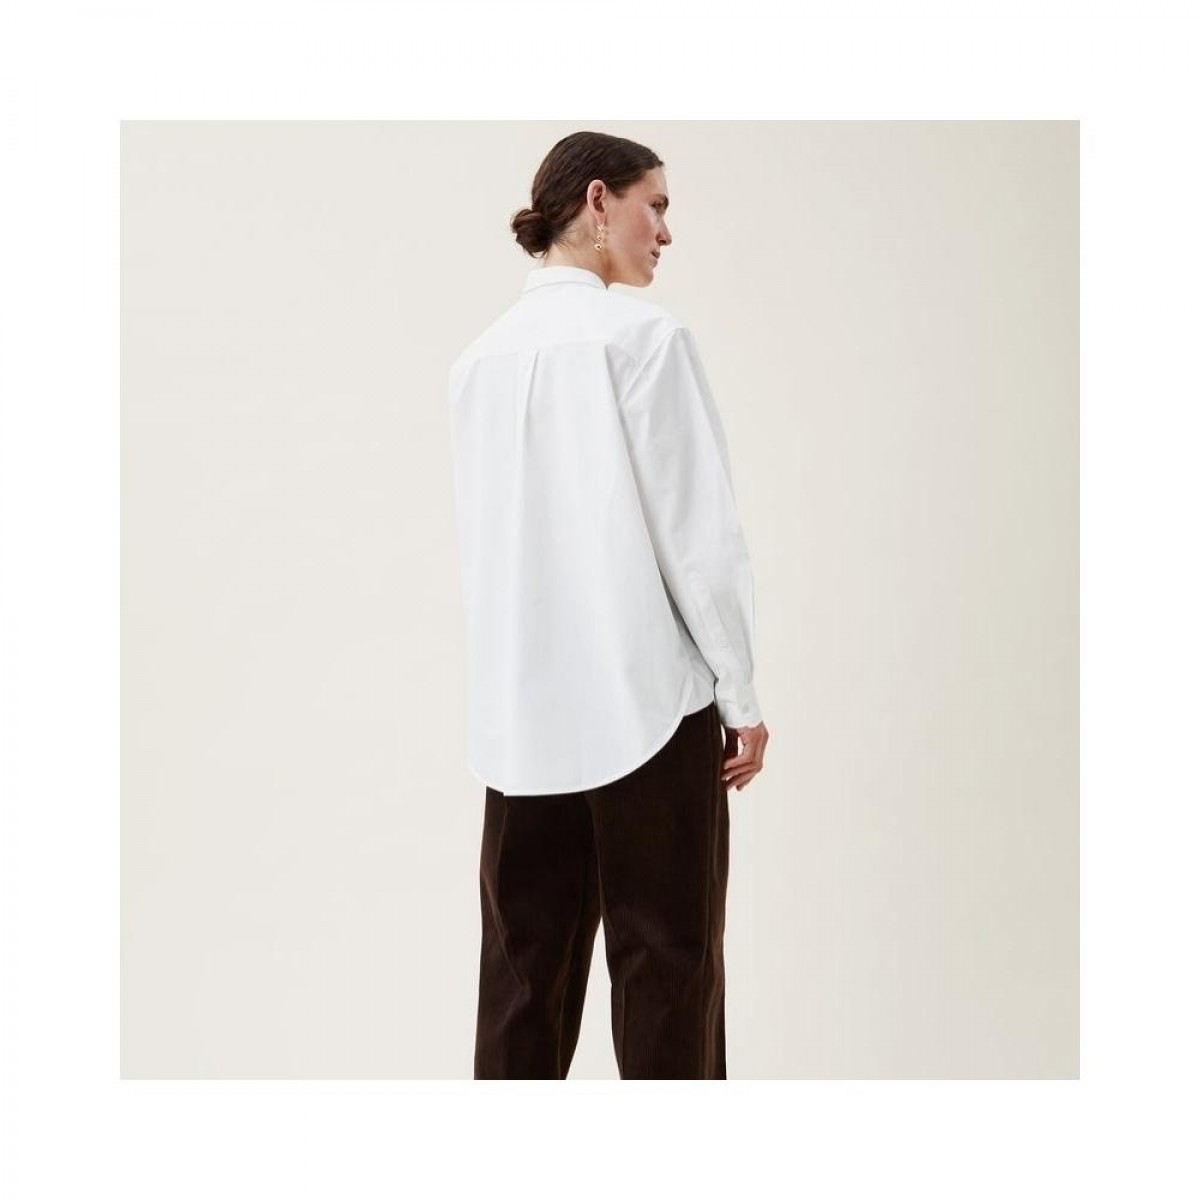 elotta shirt - bright white - ryggen